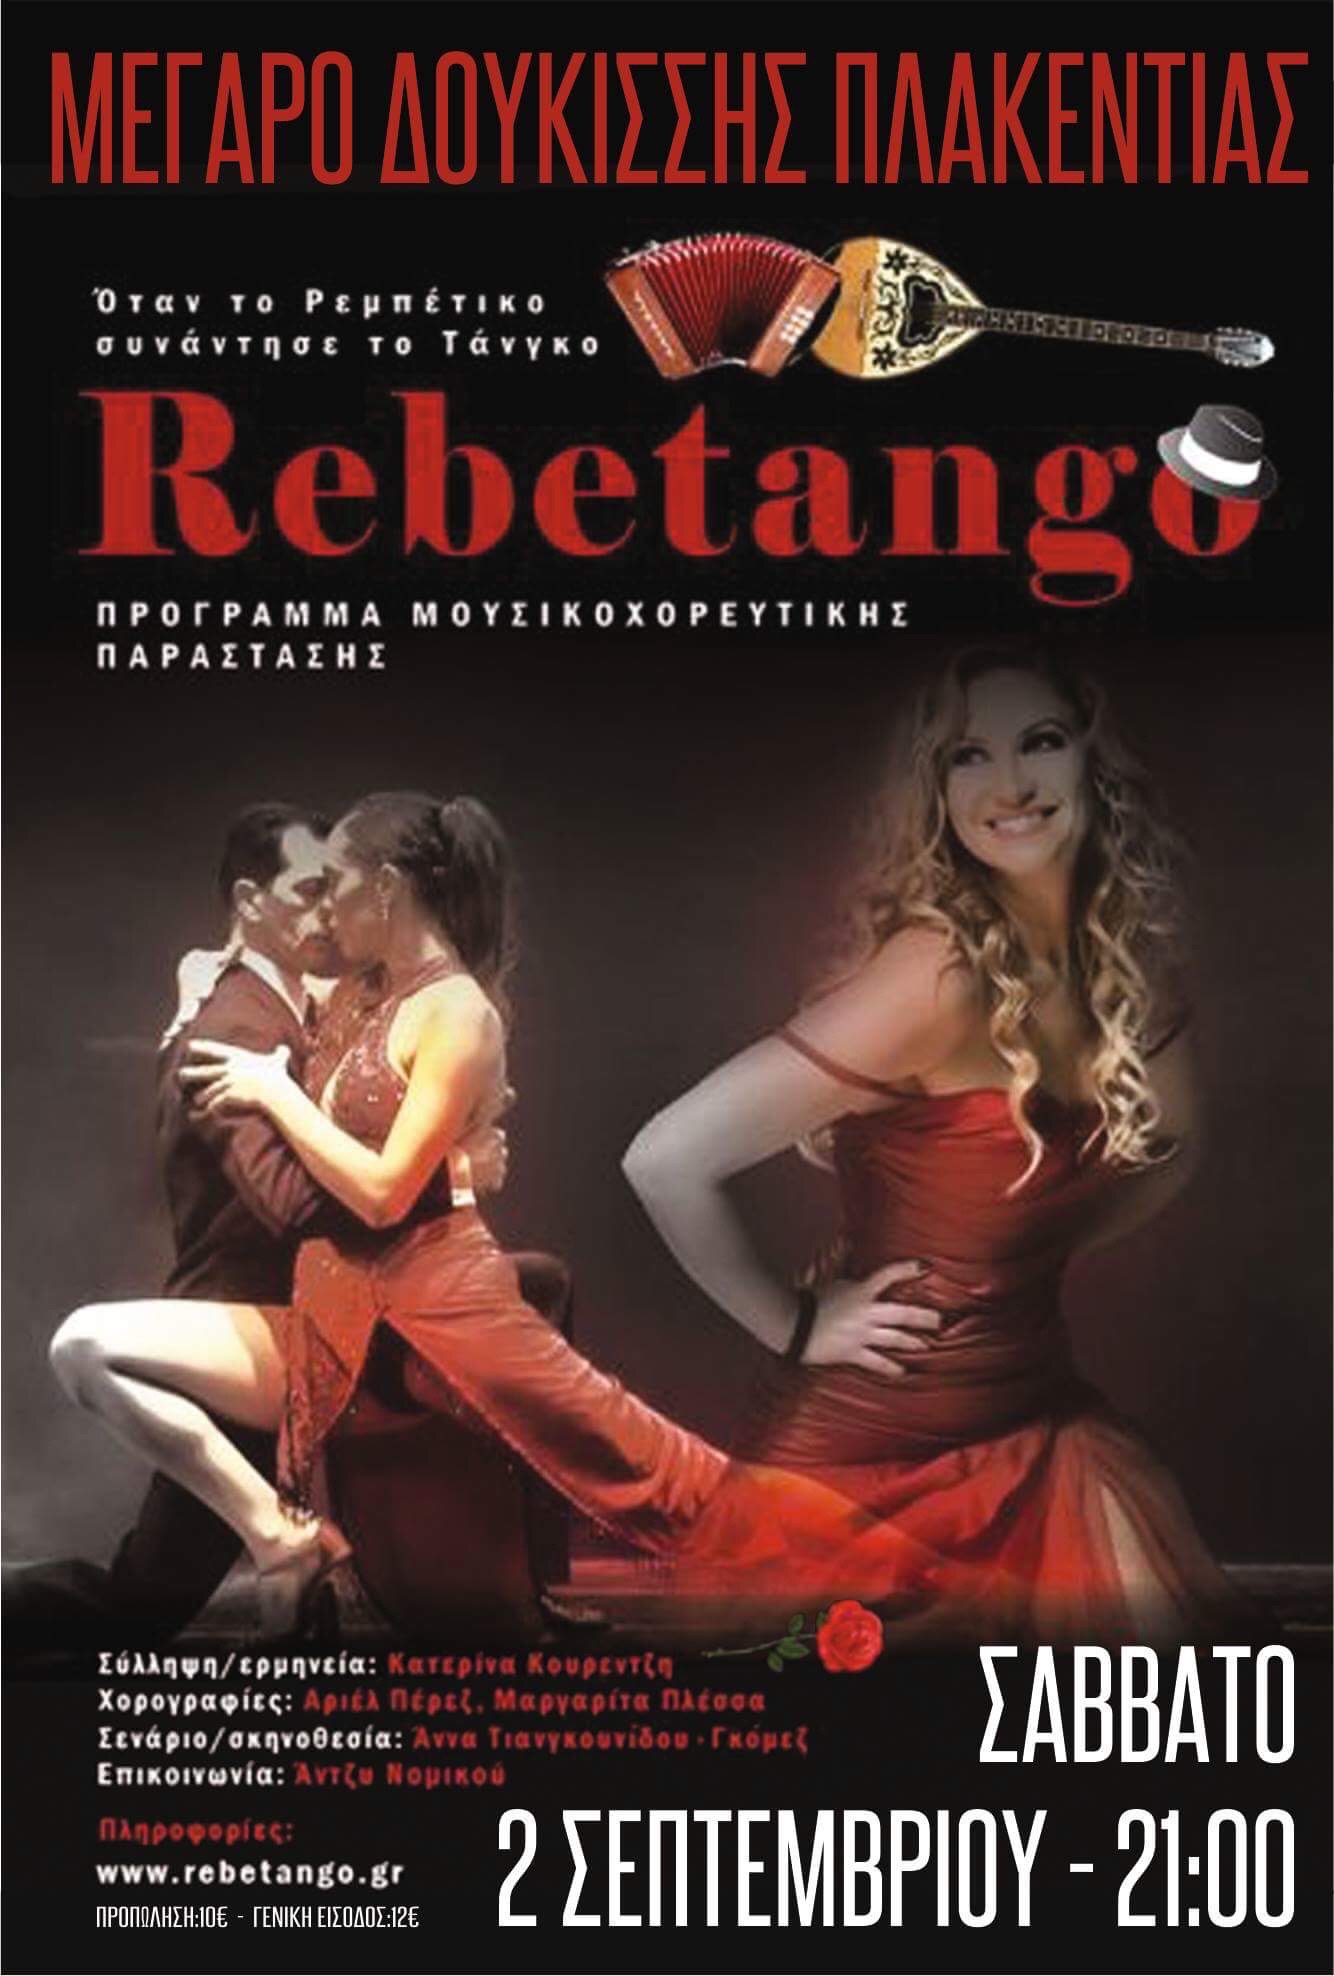 Rebetango – Όταν το tango συνάντησε το ρεμπέτικο